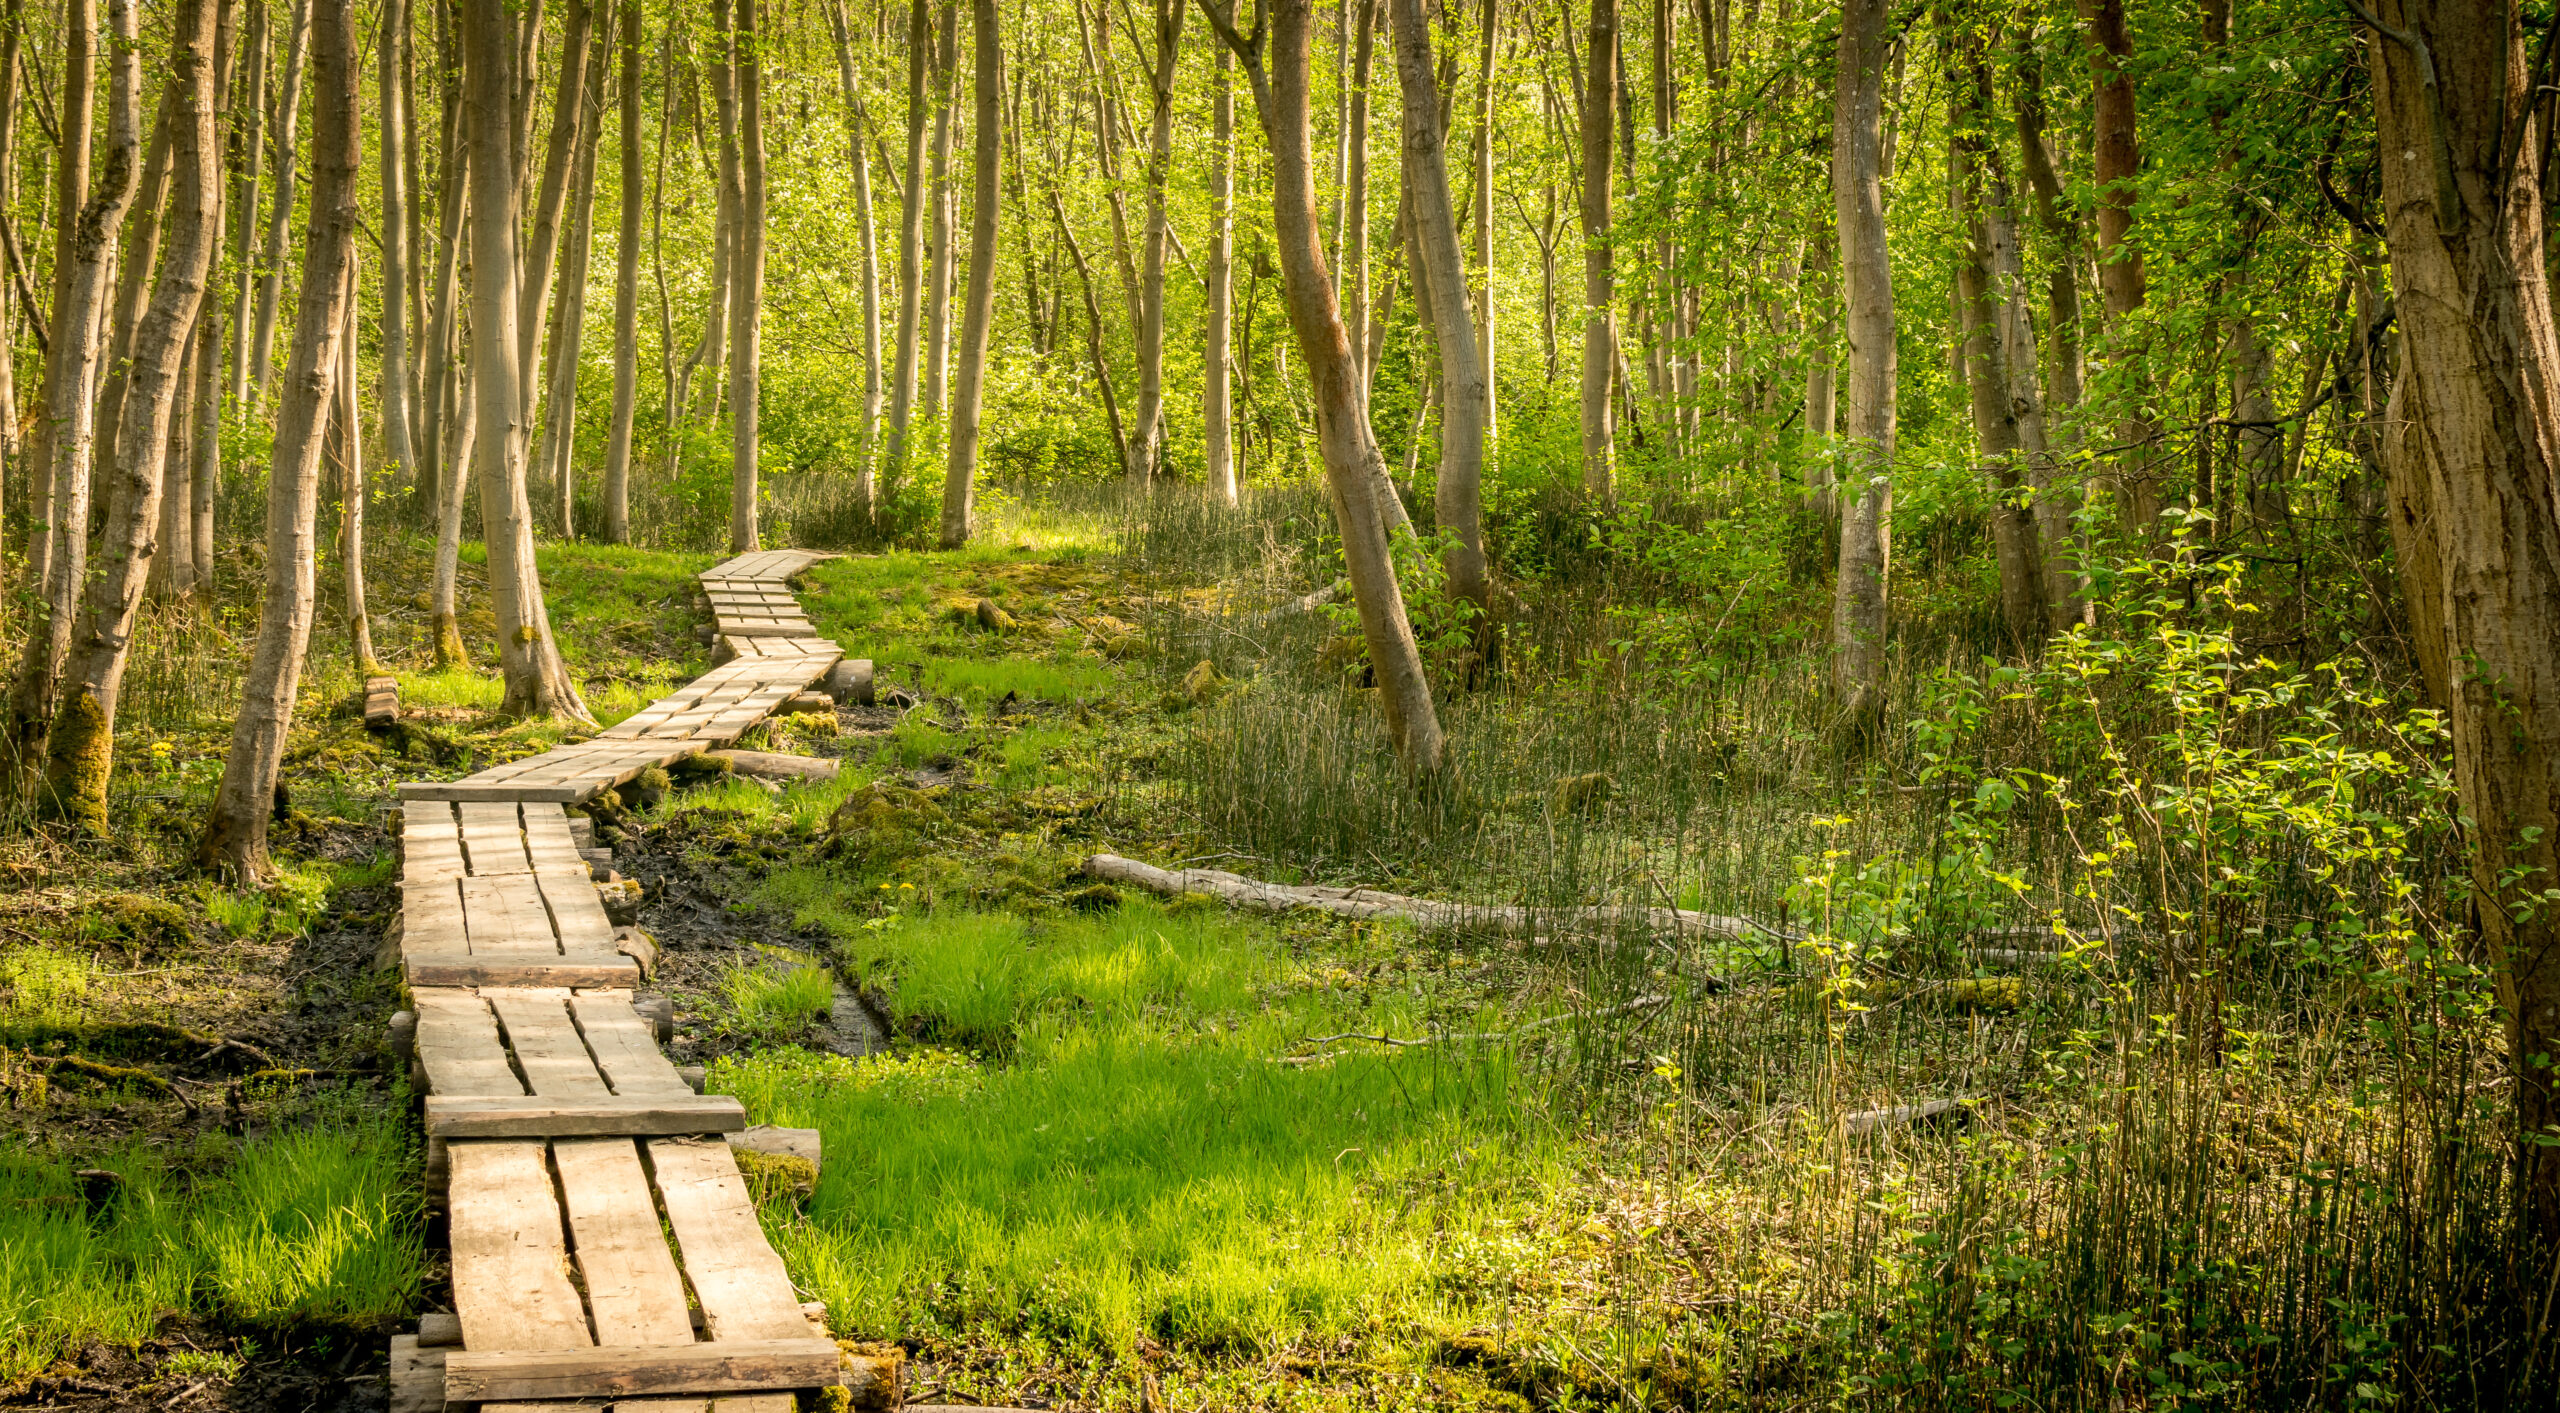 Wooden boardwalk leading through a forest.